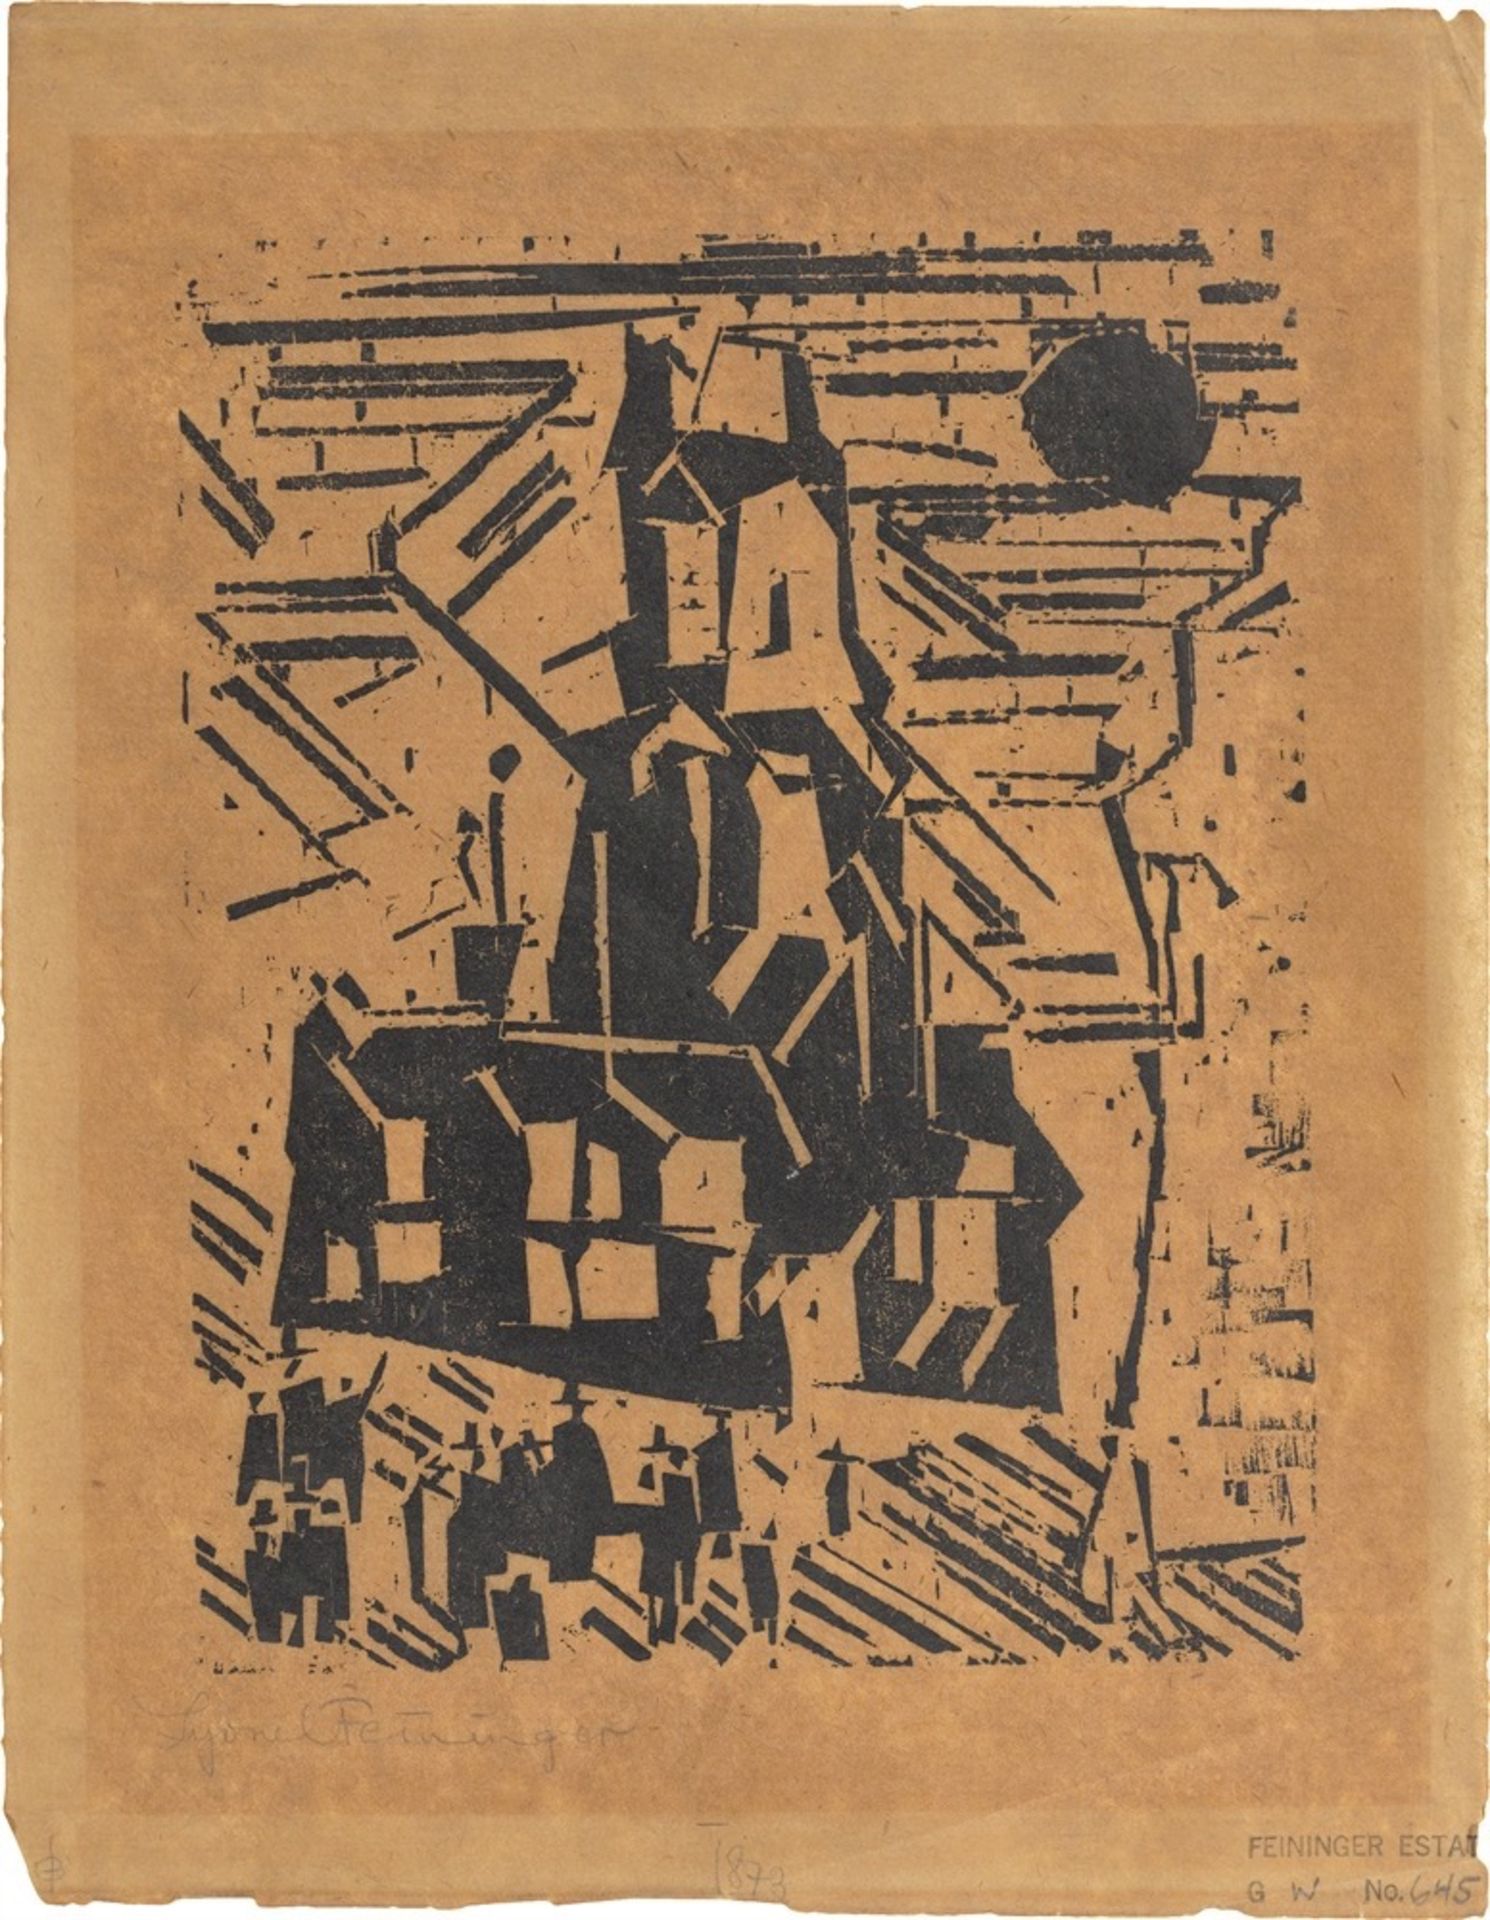 Lyonel Feininger. „Rathausplatz“. 1918